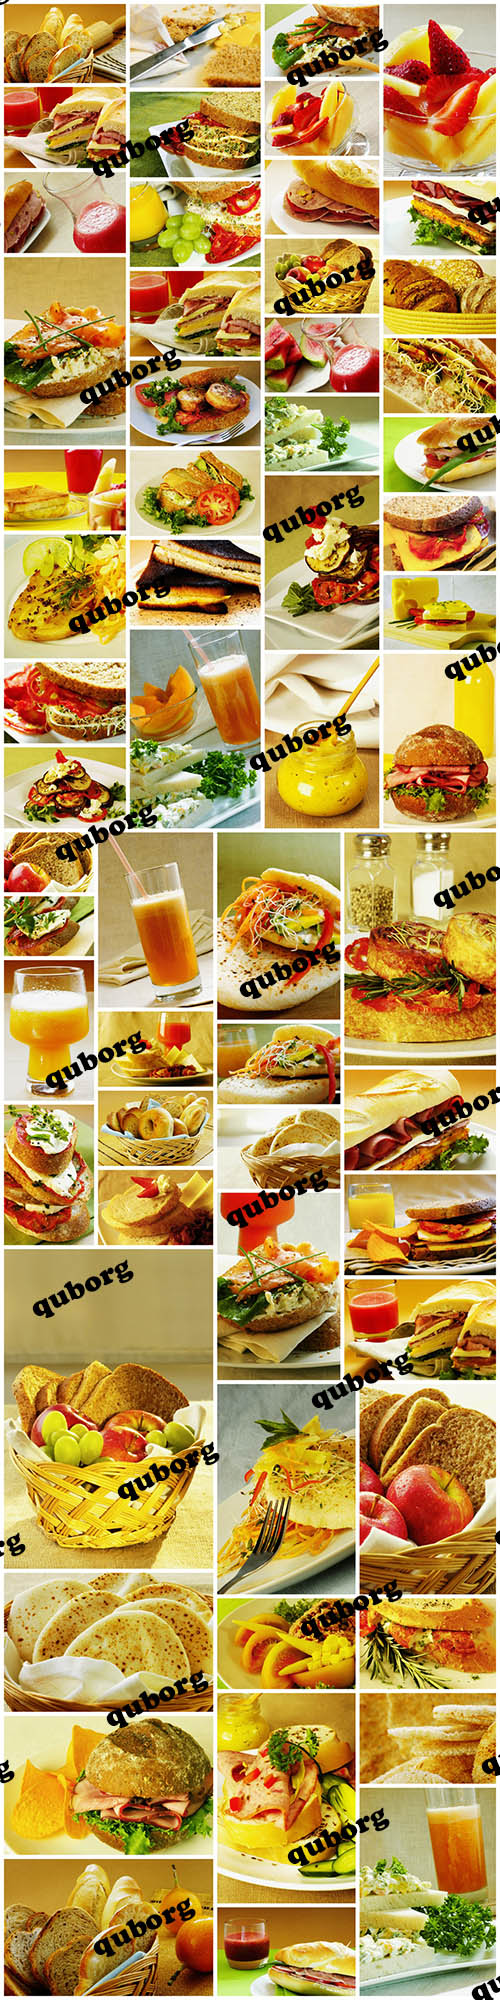 Stock Photos - Gourmet Lunch